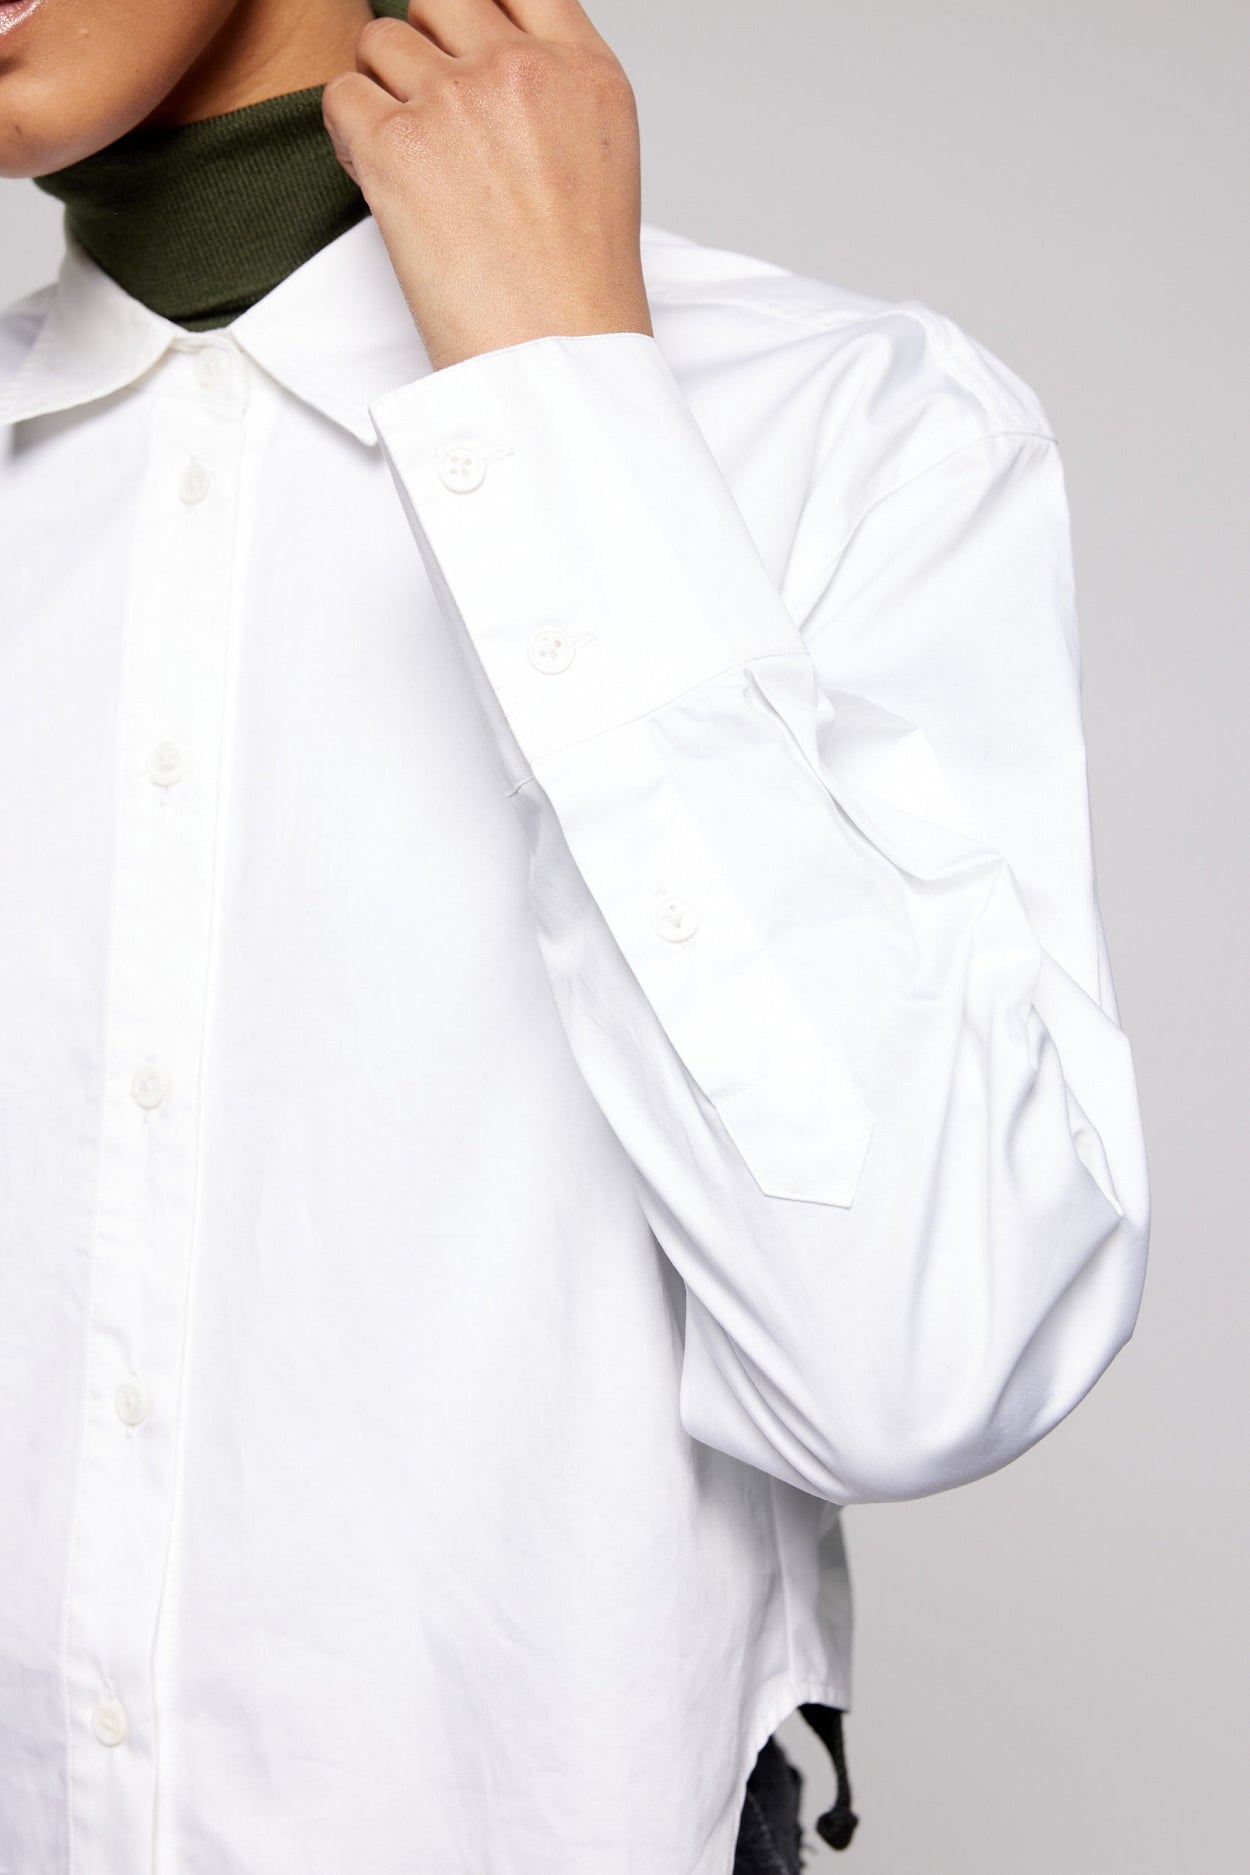 BOOGY shirt | OPTICAL WHITE